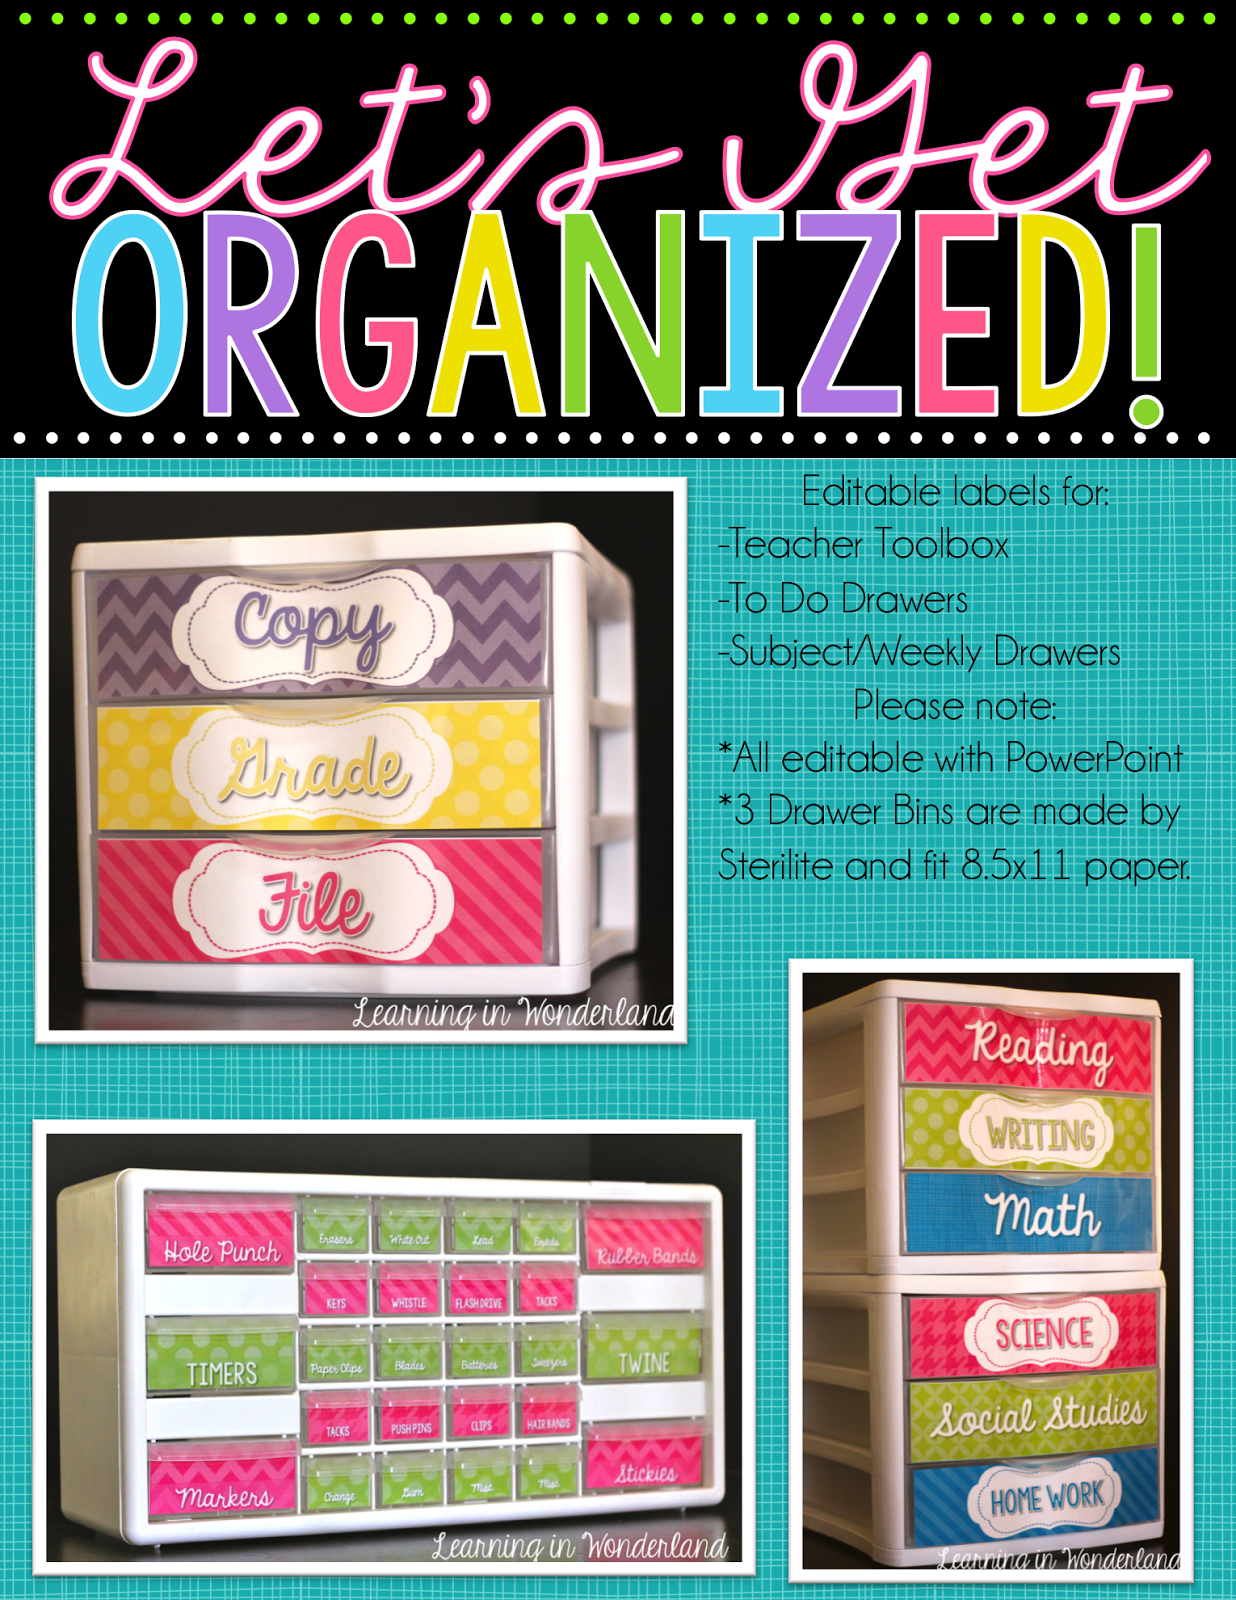 https://www.teacherspayteachers.com/Product/Lets-Get-Organized-Colorful-Pattern-Edition-1917002